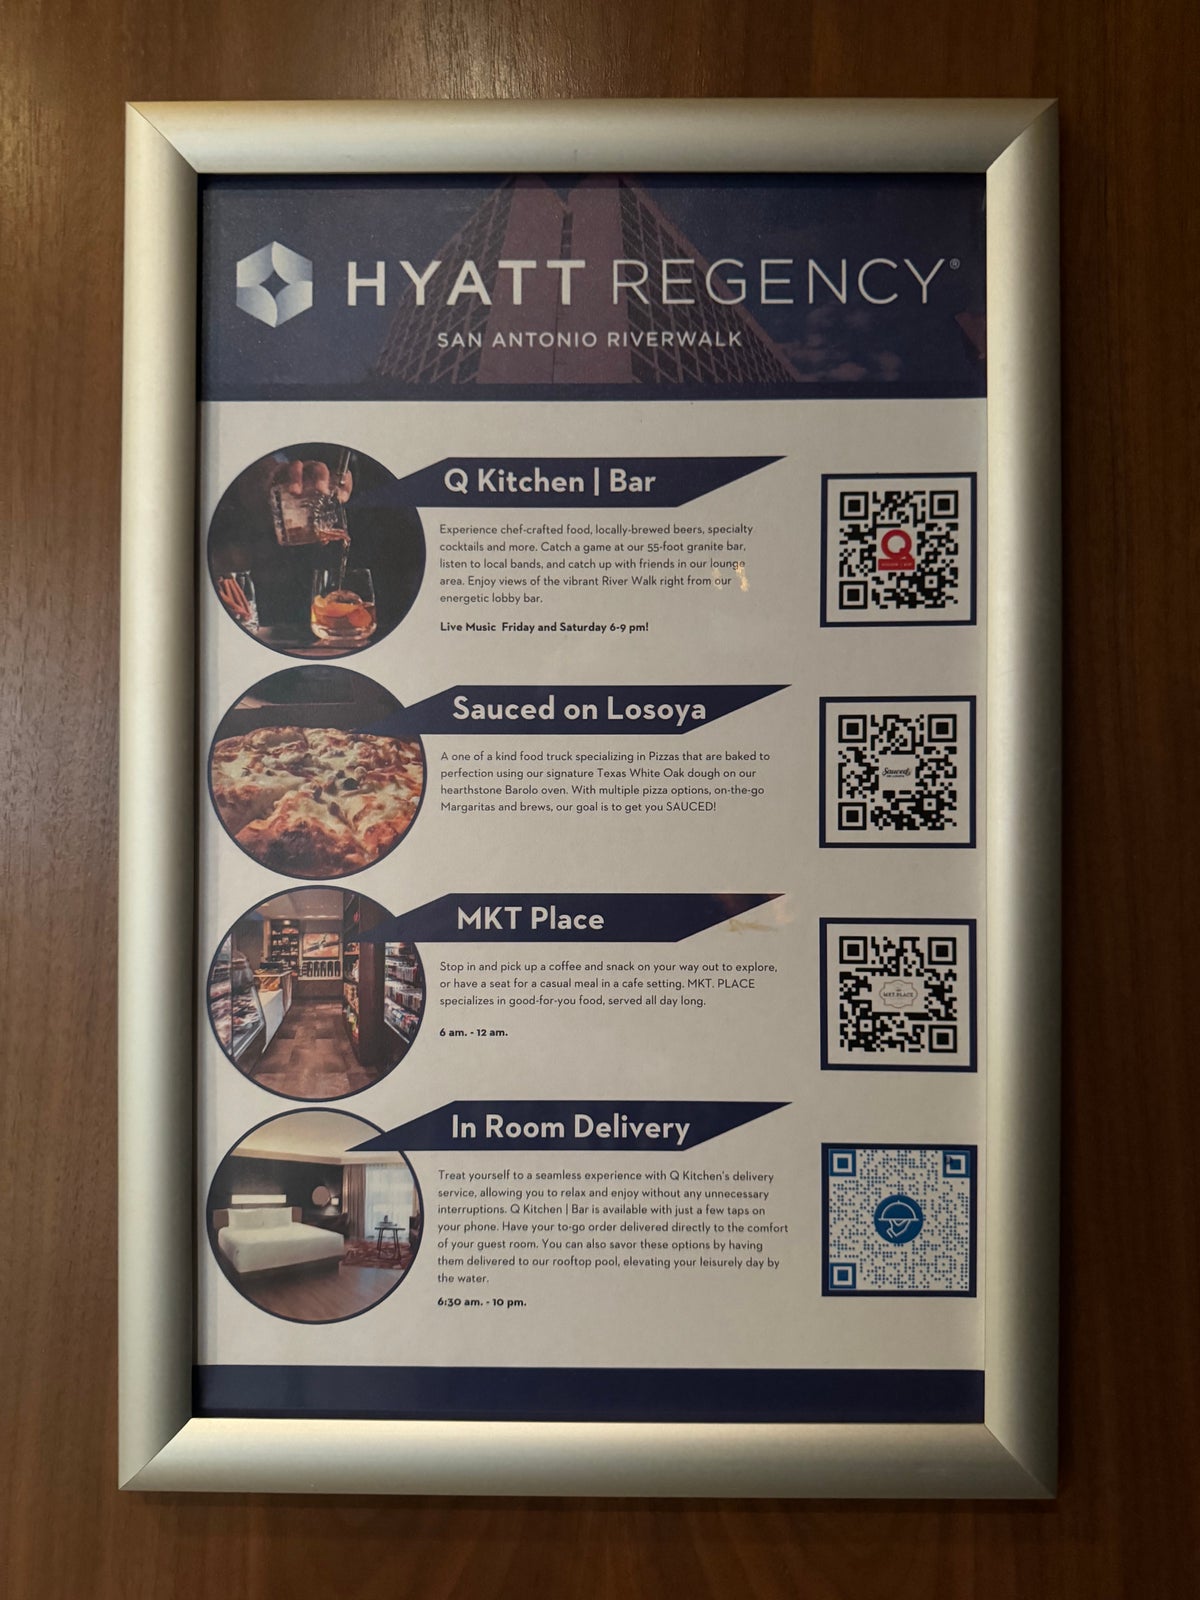 Hyatt Regency San Antonio Riverwalk elevator information about restaurants